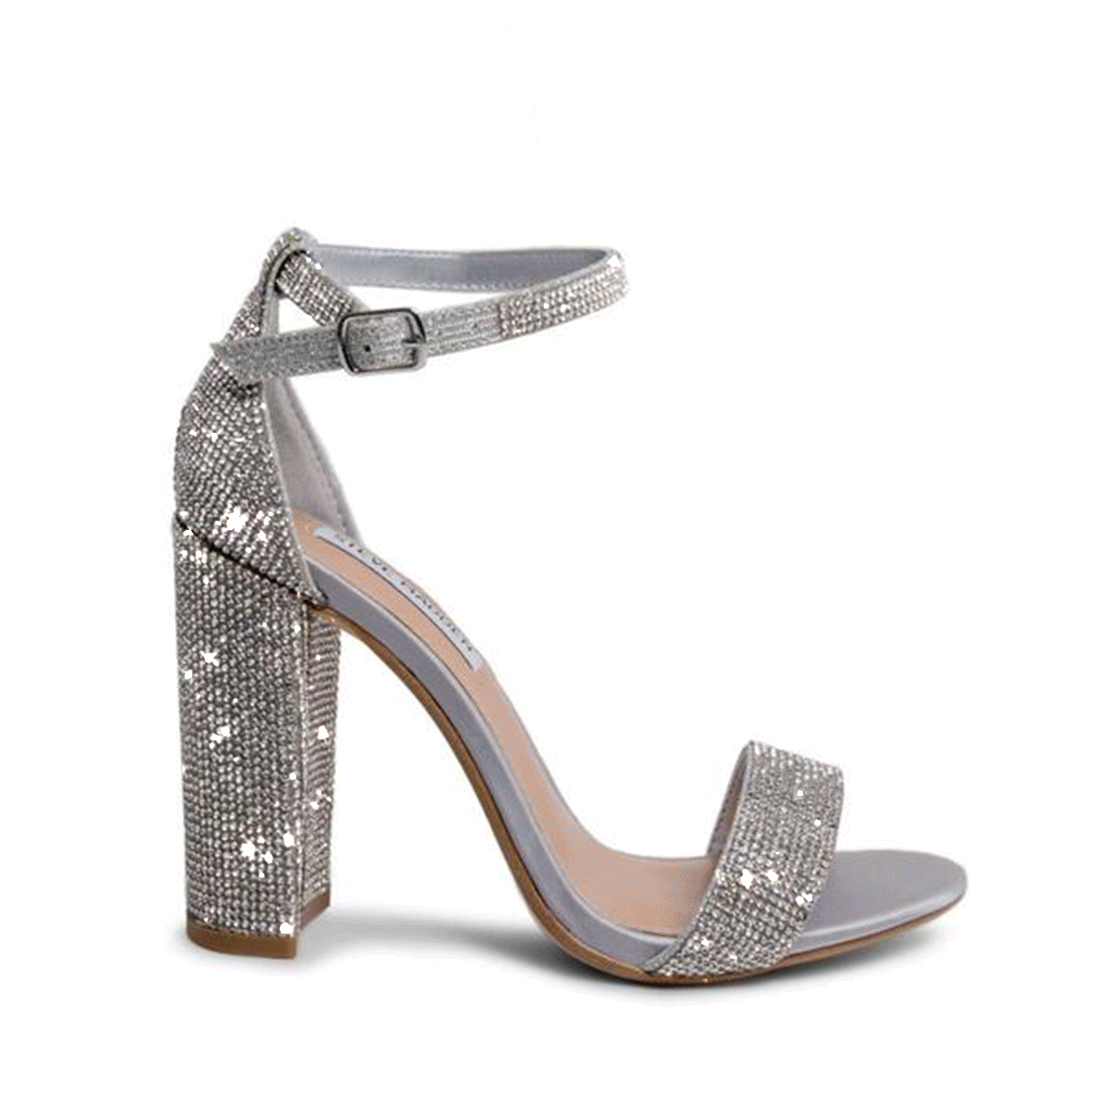 Steve Madden CHARLIZE - Platform heels - silver-coloured - Zalando.ie